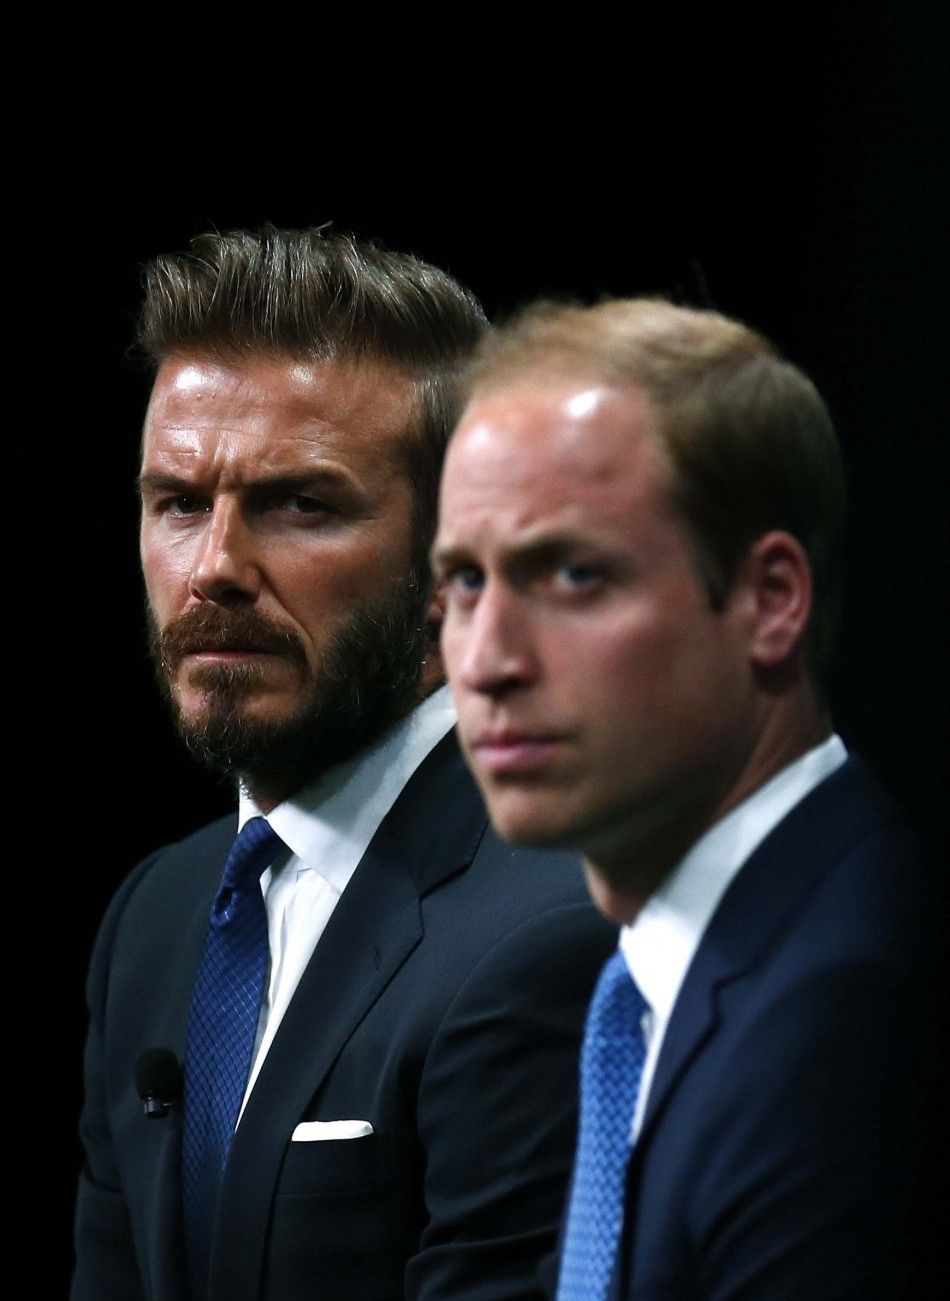 Prince William and David Beckham